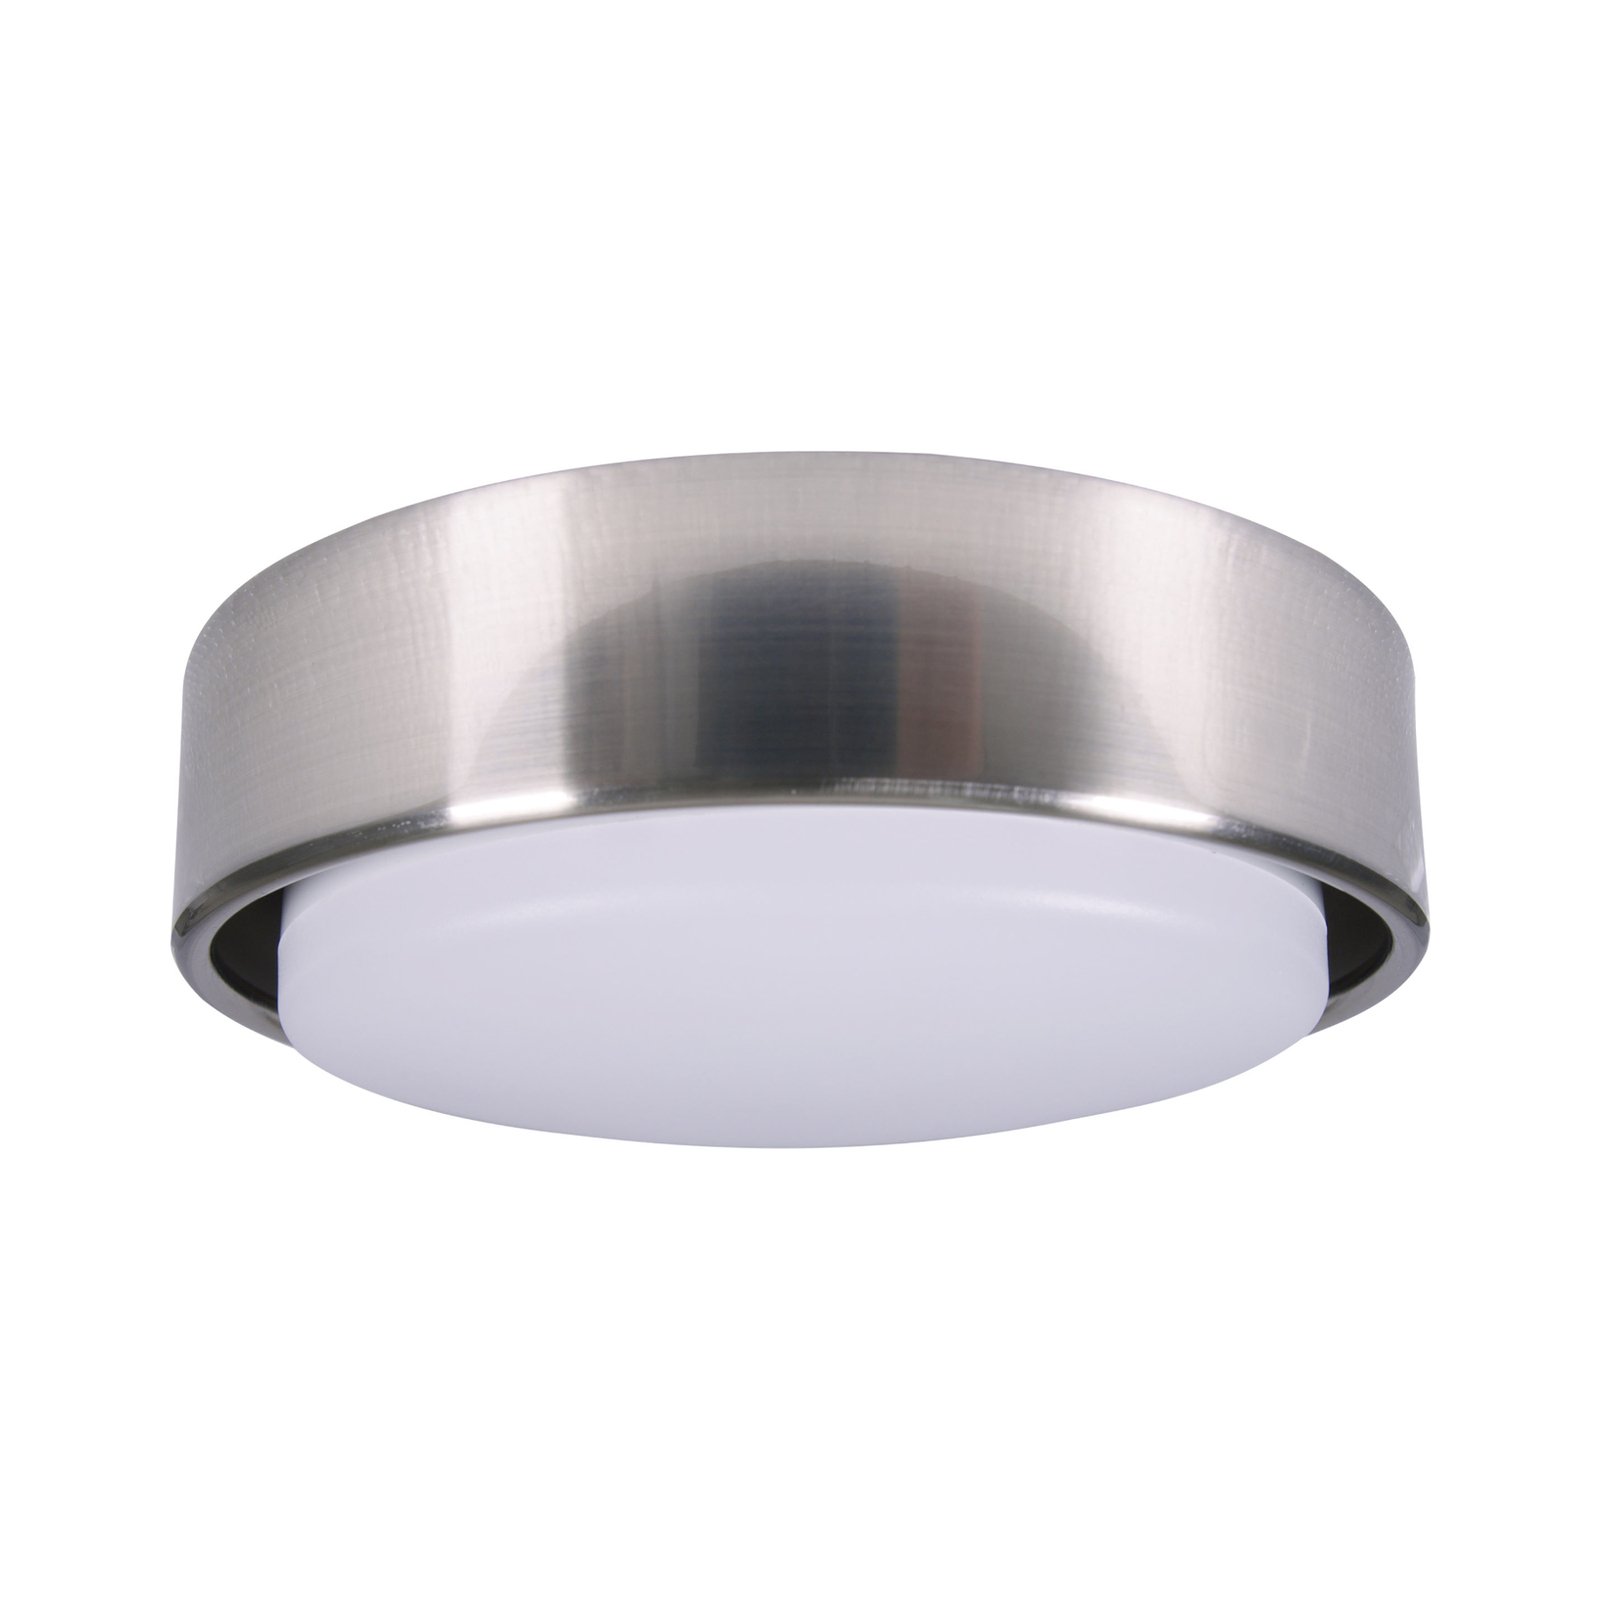 Beacon Lucci Air light for ceiling fan chrome GX53-LED